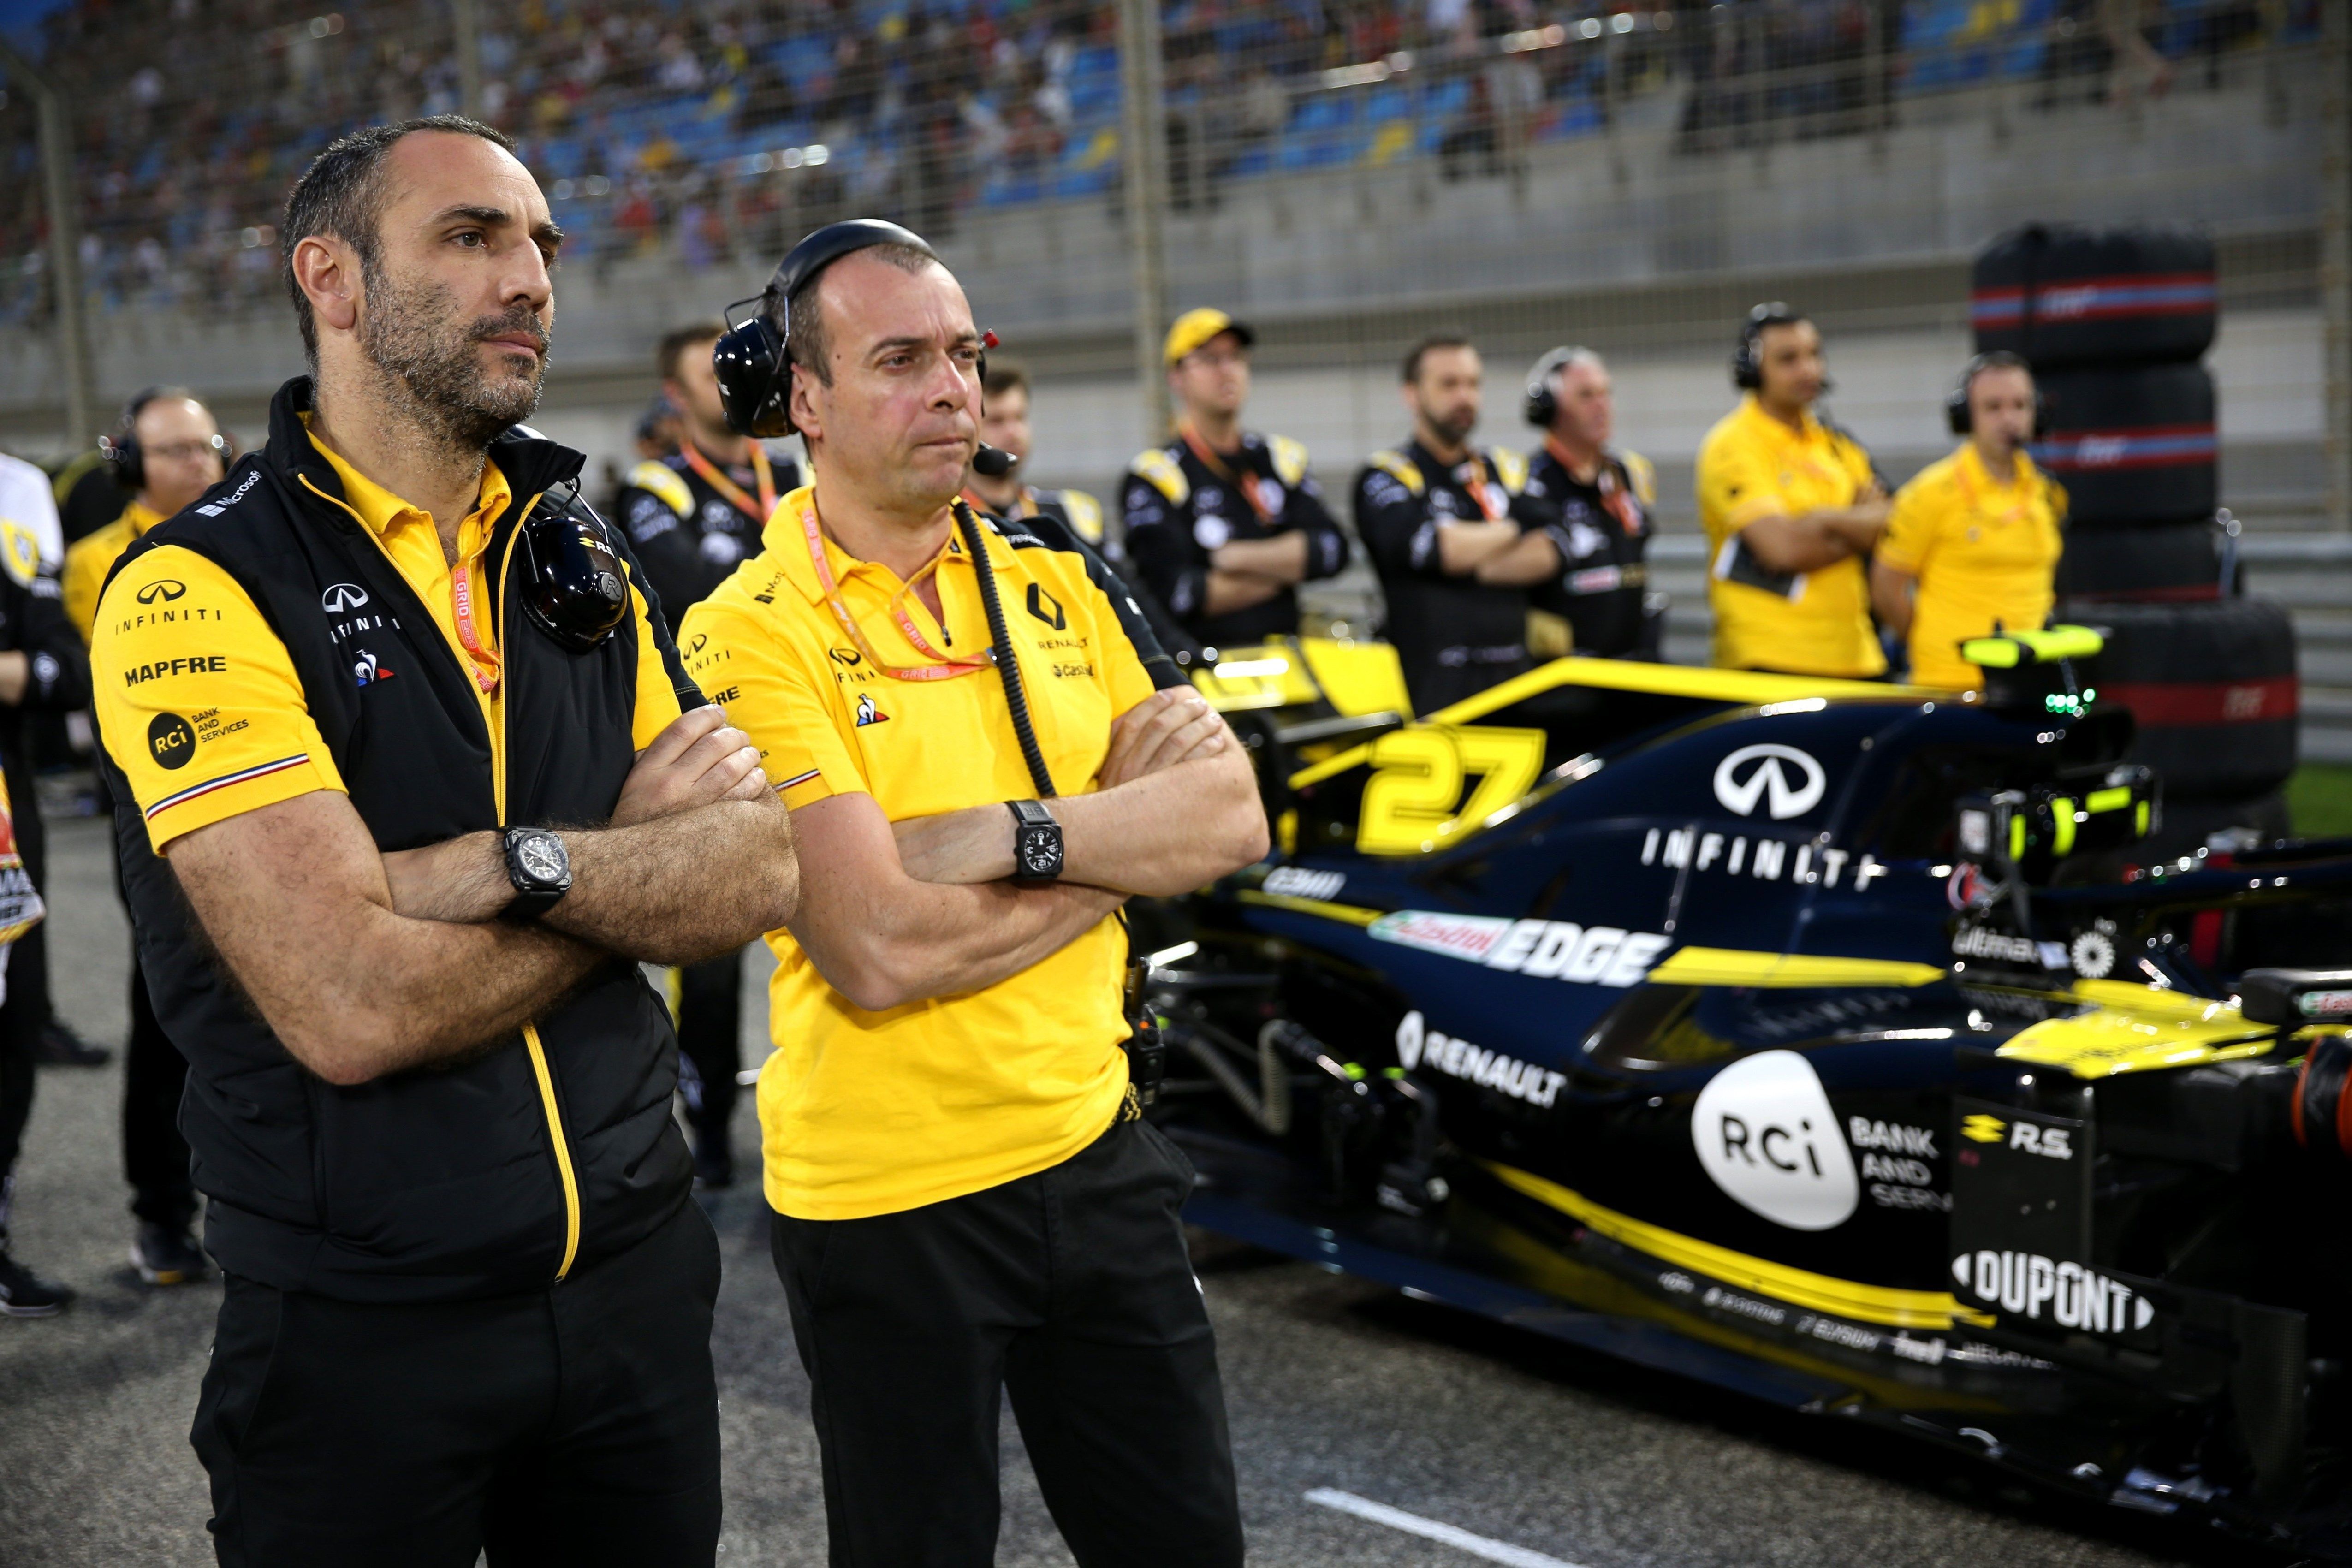 Cyril Abiteboul, Renault, F1